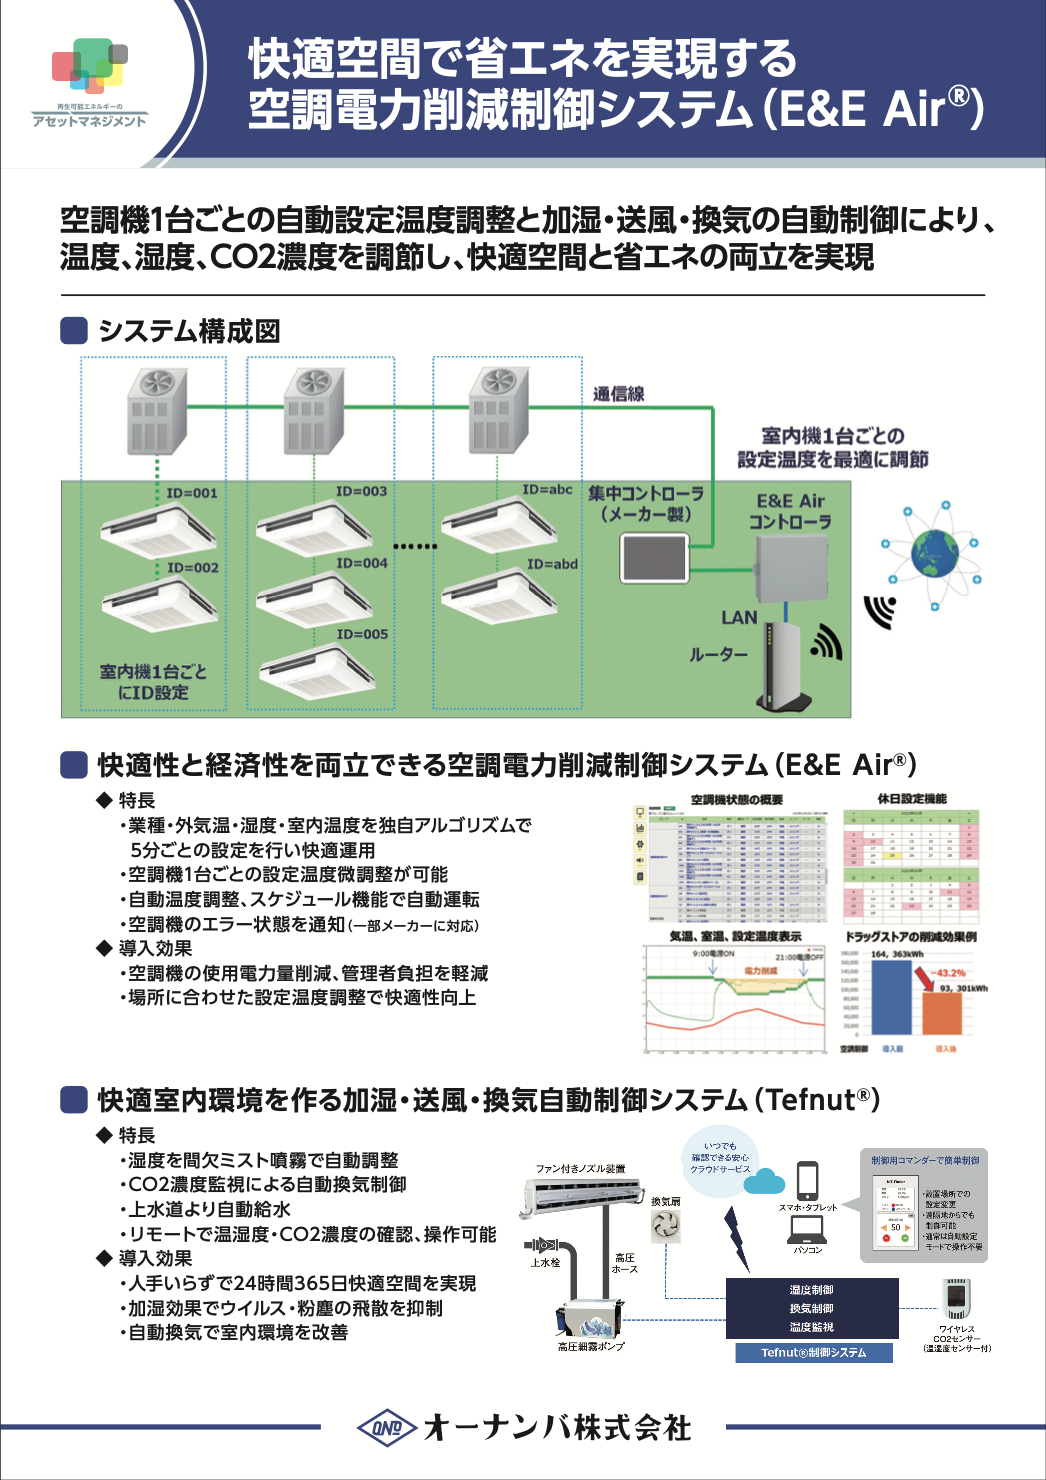 E&E Air: Air Conditioning Power Control Systems